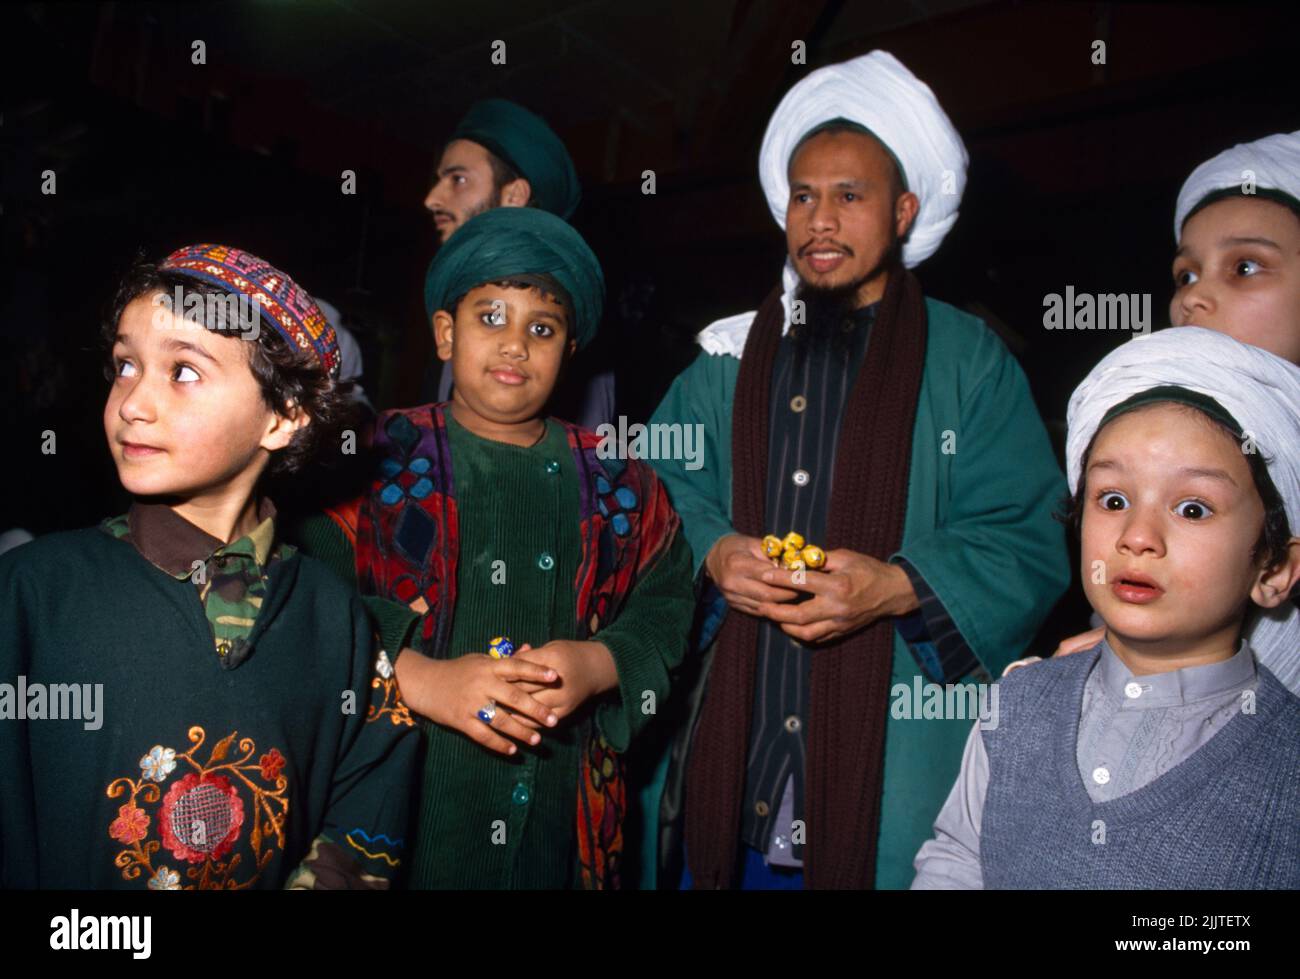 Peckham Londres Inglaterra Iman Giving Children Sweets at Eid Foto de stock